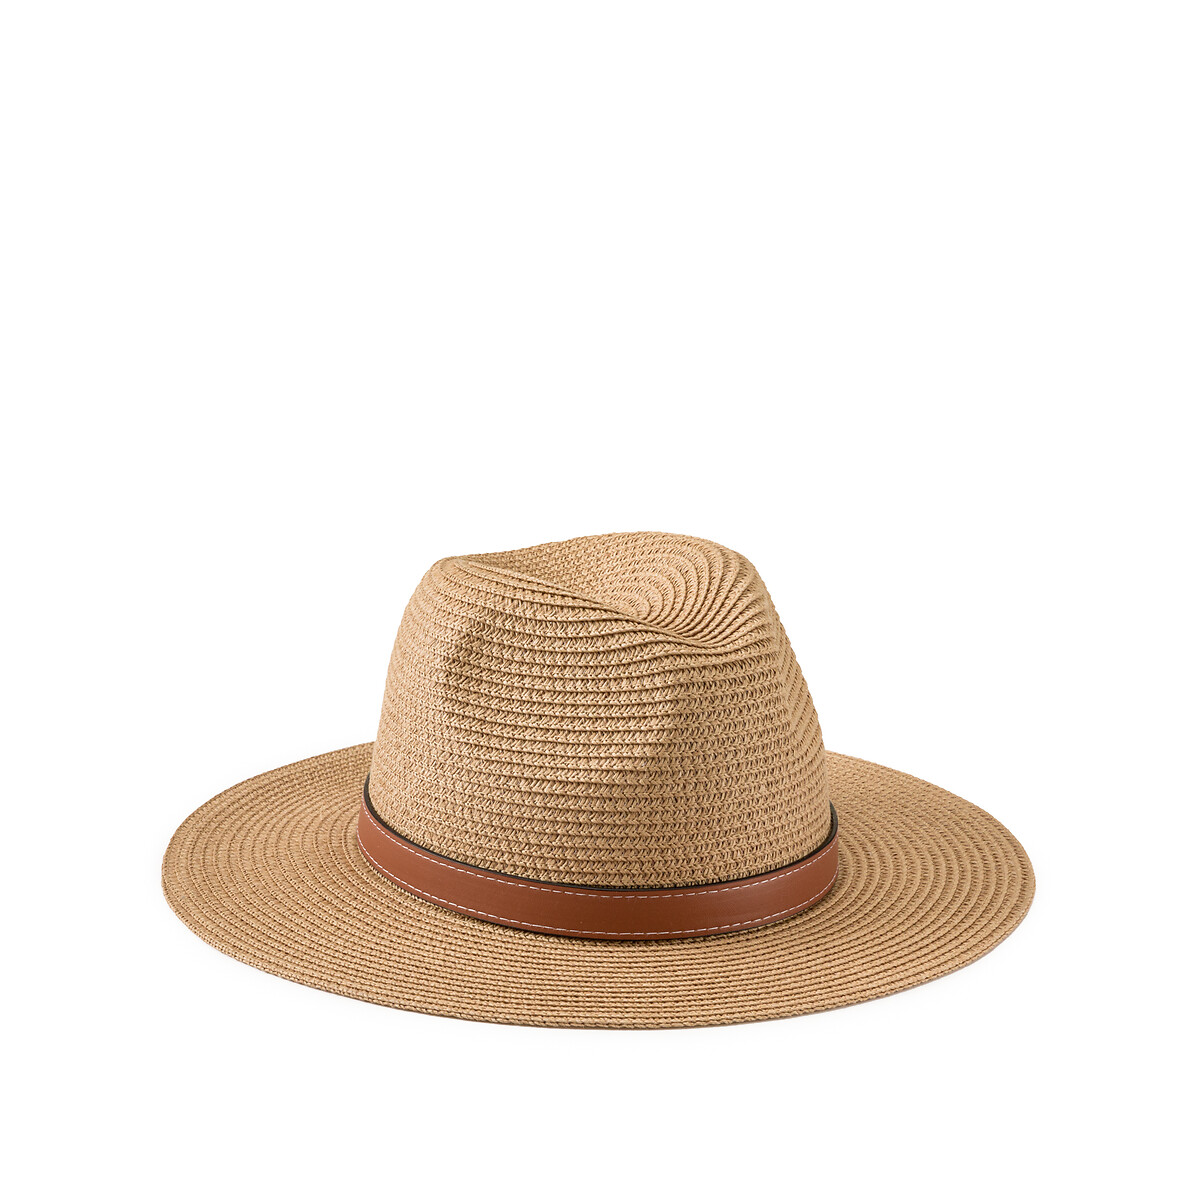 Шляпа из соломы UNI бежевый летняя вязаная шляпа рыбака с вырезами шляпа от солнца и солнца универсальная летняя шляпа от солнца уличные панамы